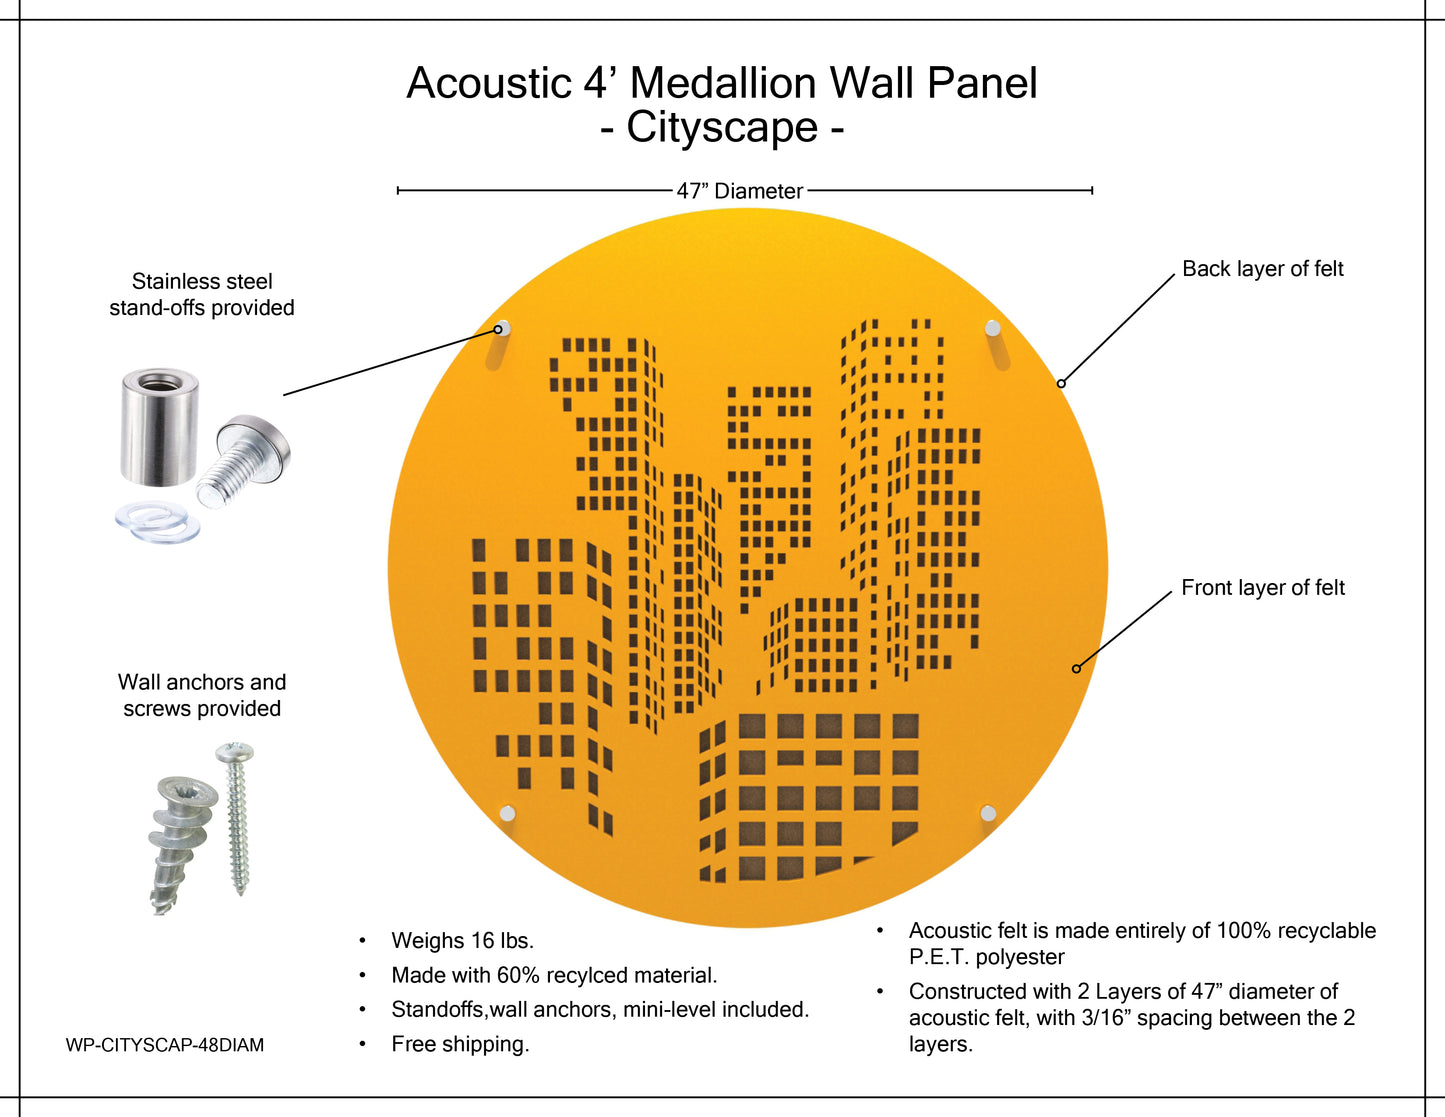 Medallion Acoustic Wall Panel - Cityscape